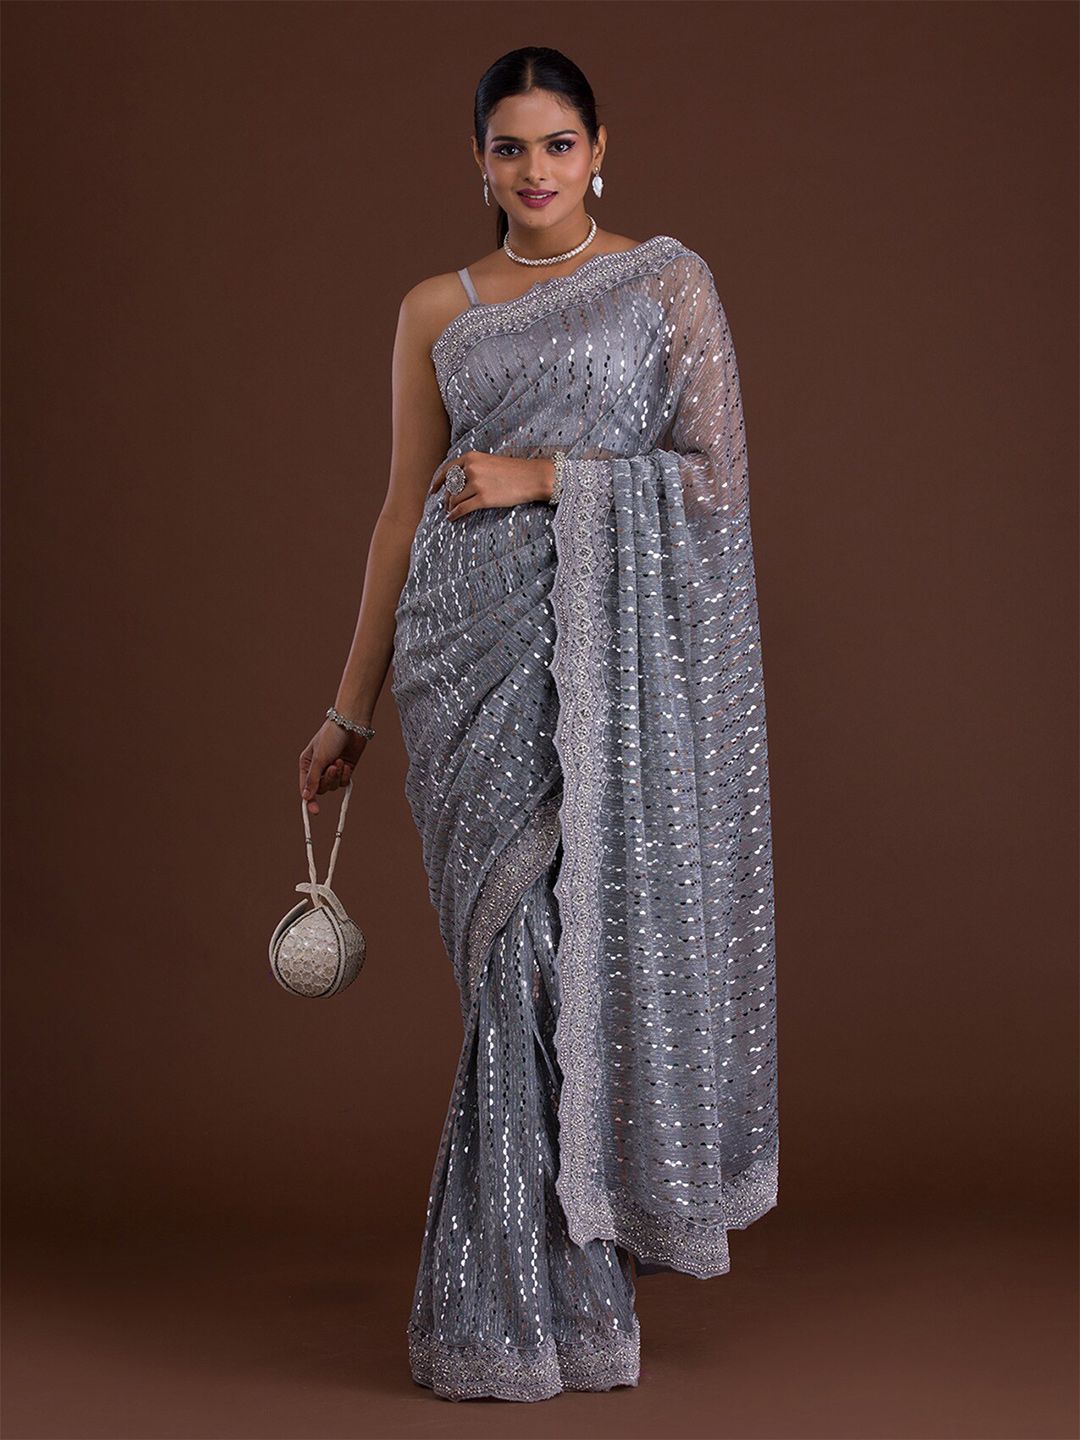 Koskii Grey & Silver-Toned Embellished Mirror Work Supernet Saree Price in India